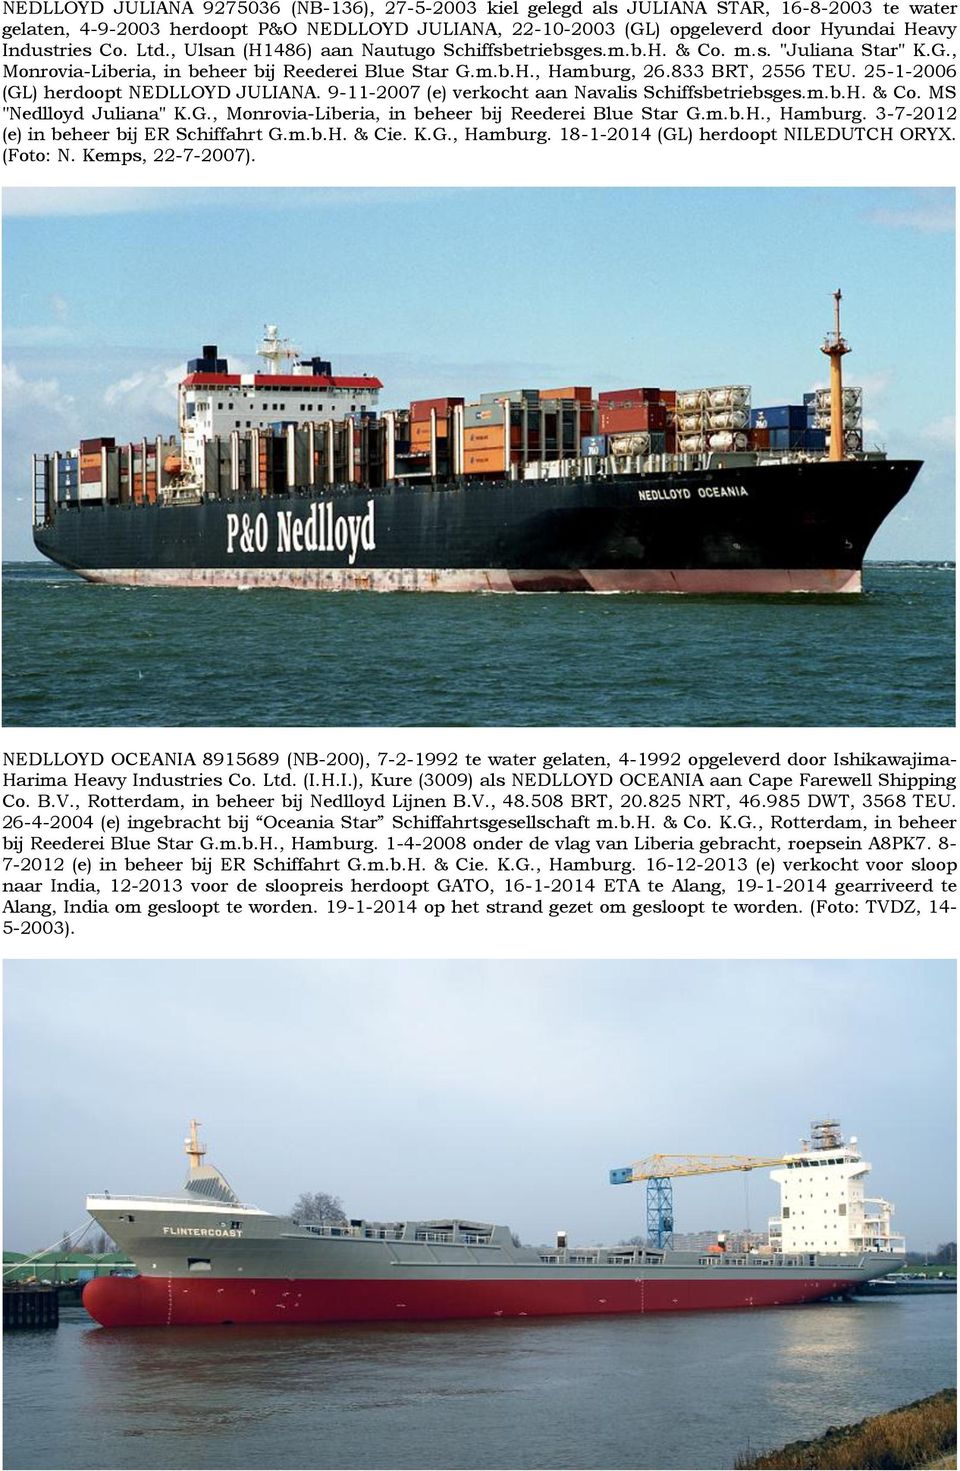 25-1-2006 (GL) herdoopt NEDLLOYD JULIANA. 9-11-2007 (e) verkocht aan Navalis Schiffsbetriebsges.m.b.H. & Co. MS "Nedlloyd Juliana" K.G., Monrovia-Liberia, in beheer bij Reederei Blue Star G.m.b.H., Hamburg.